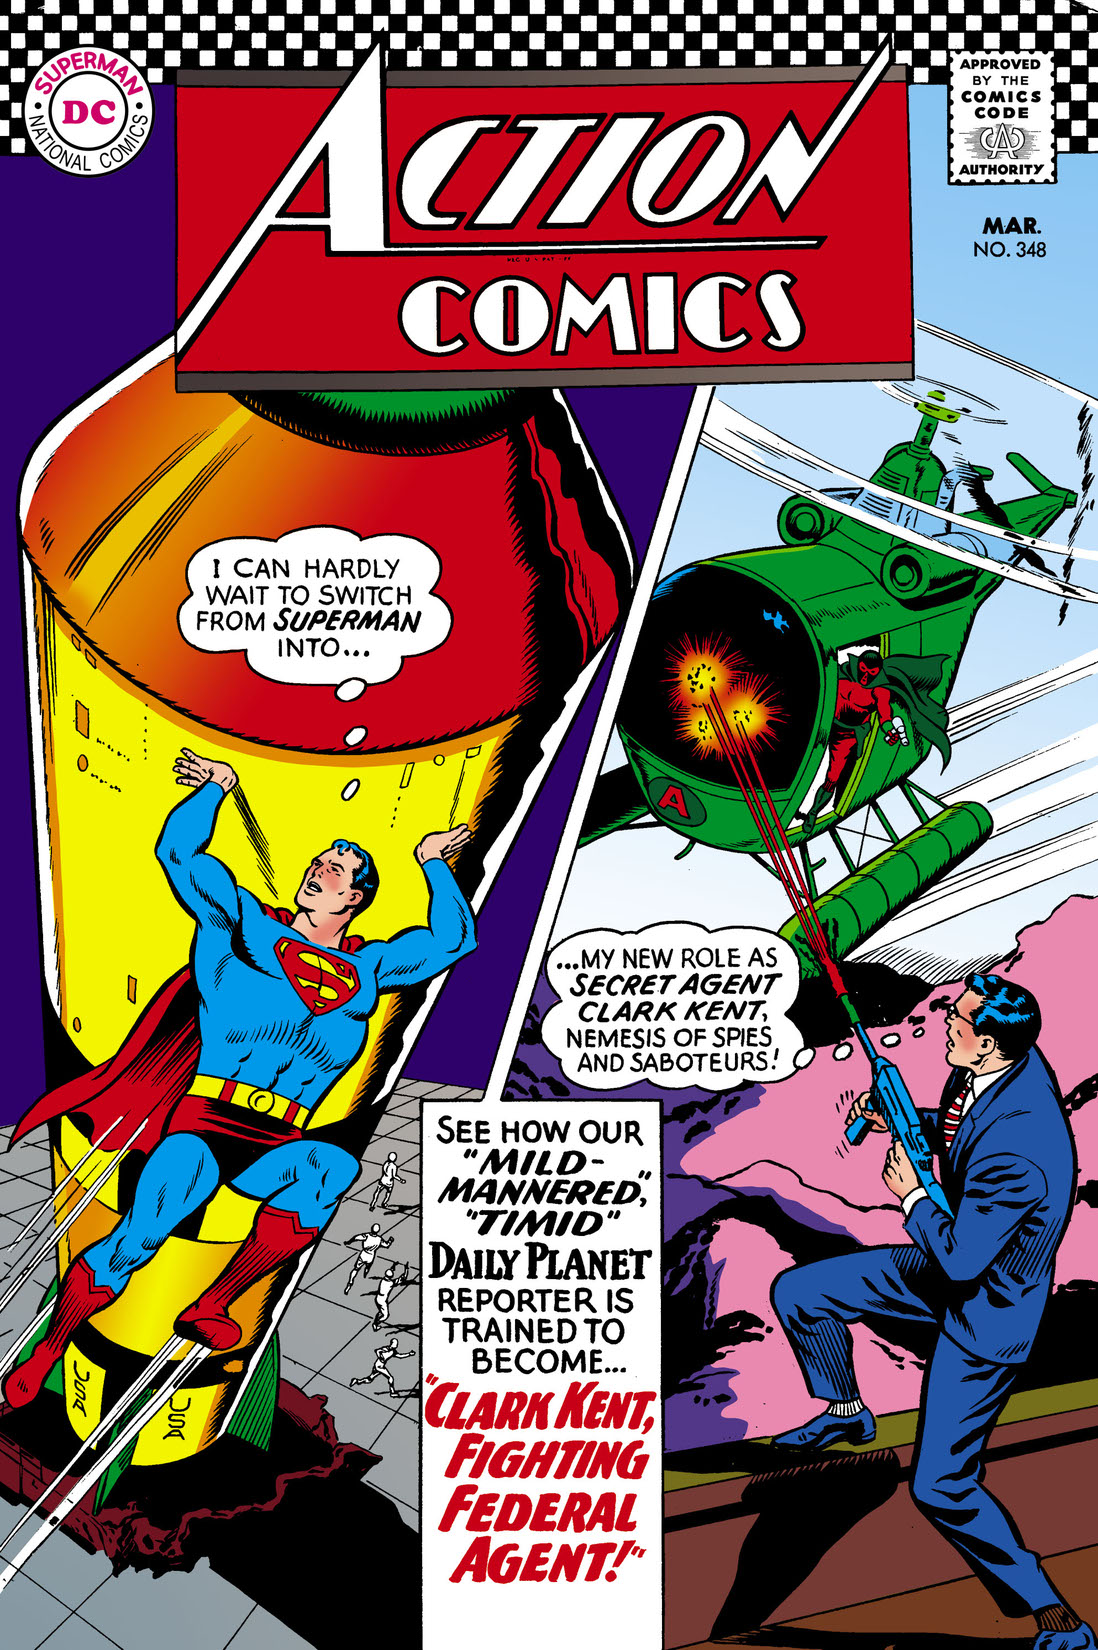 Action Comics (1938-) #348 preview images